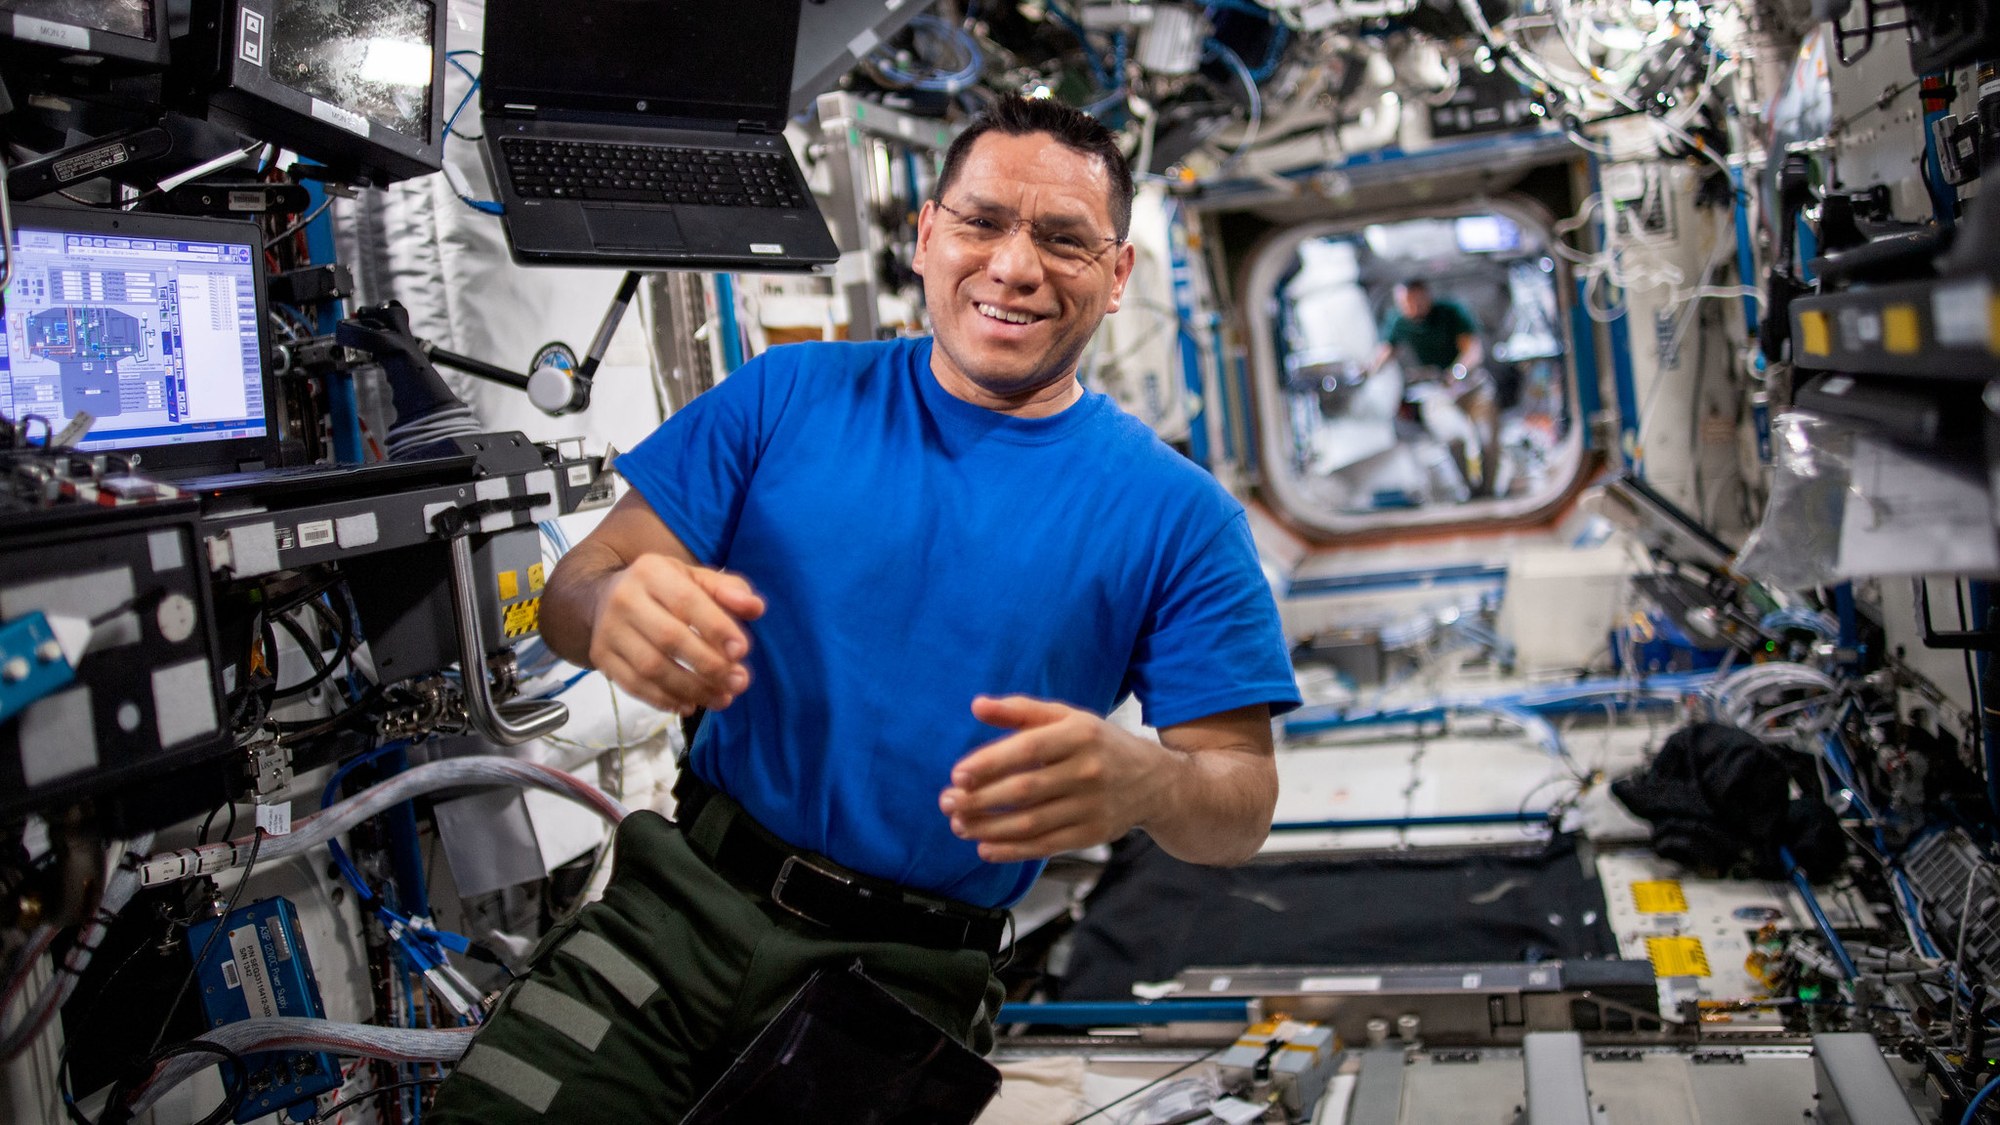 NASA astronaut Frank Rubio on board the ISS